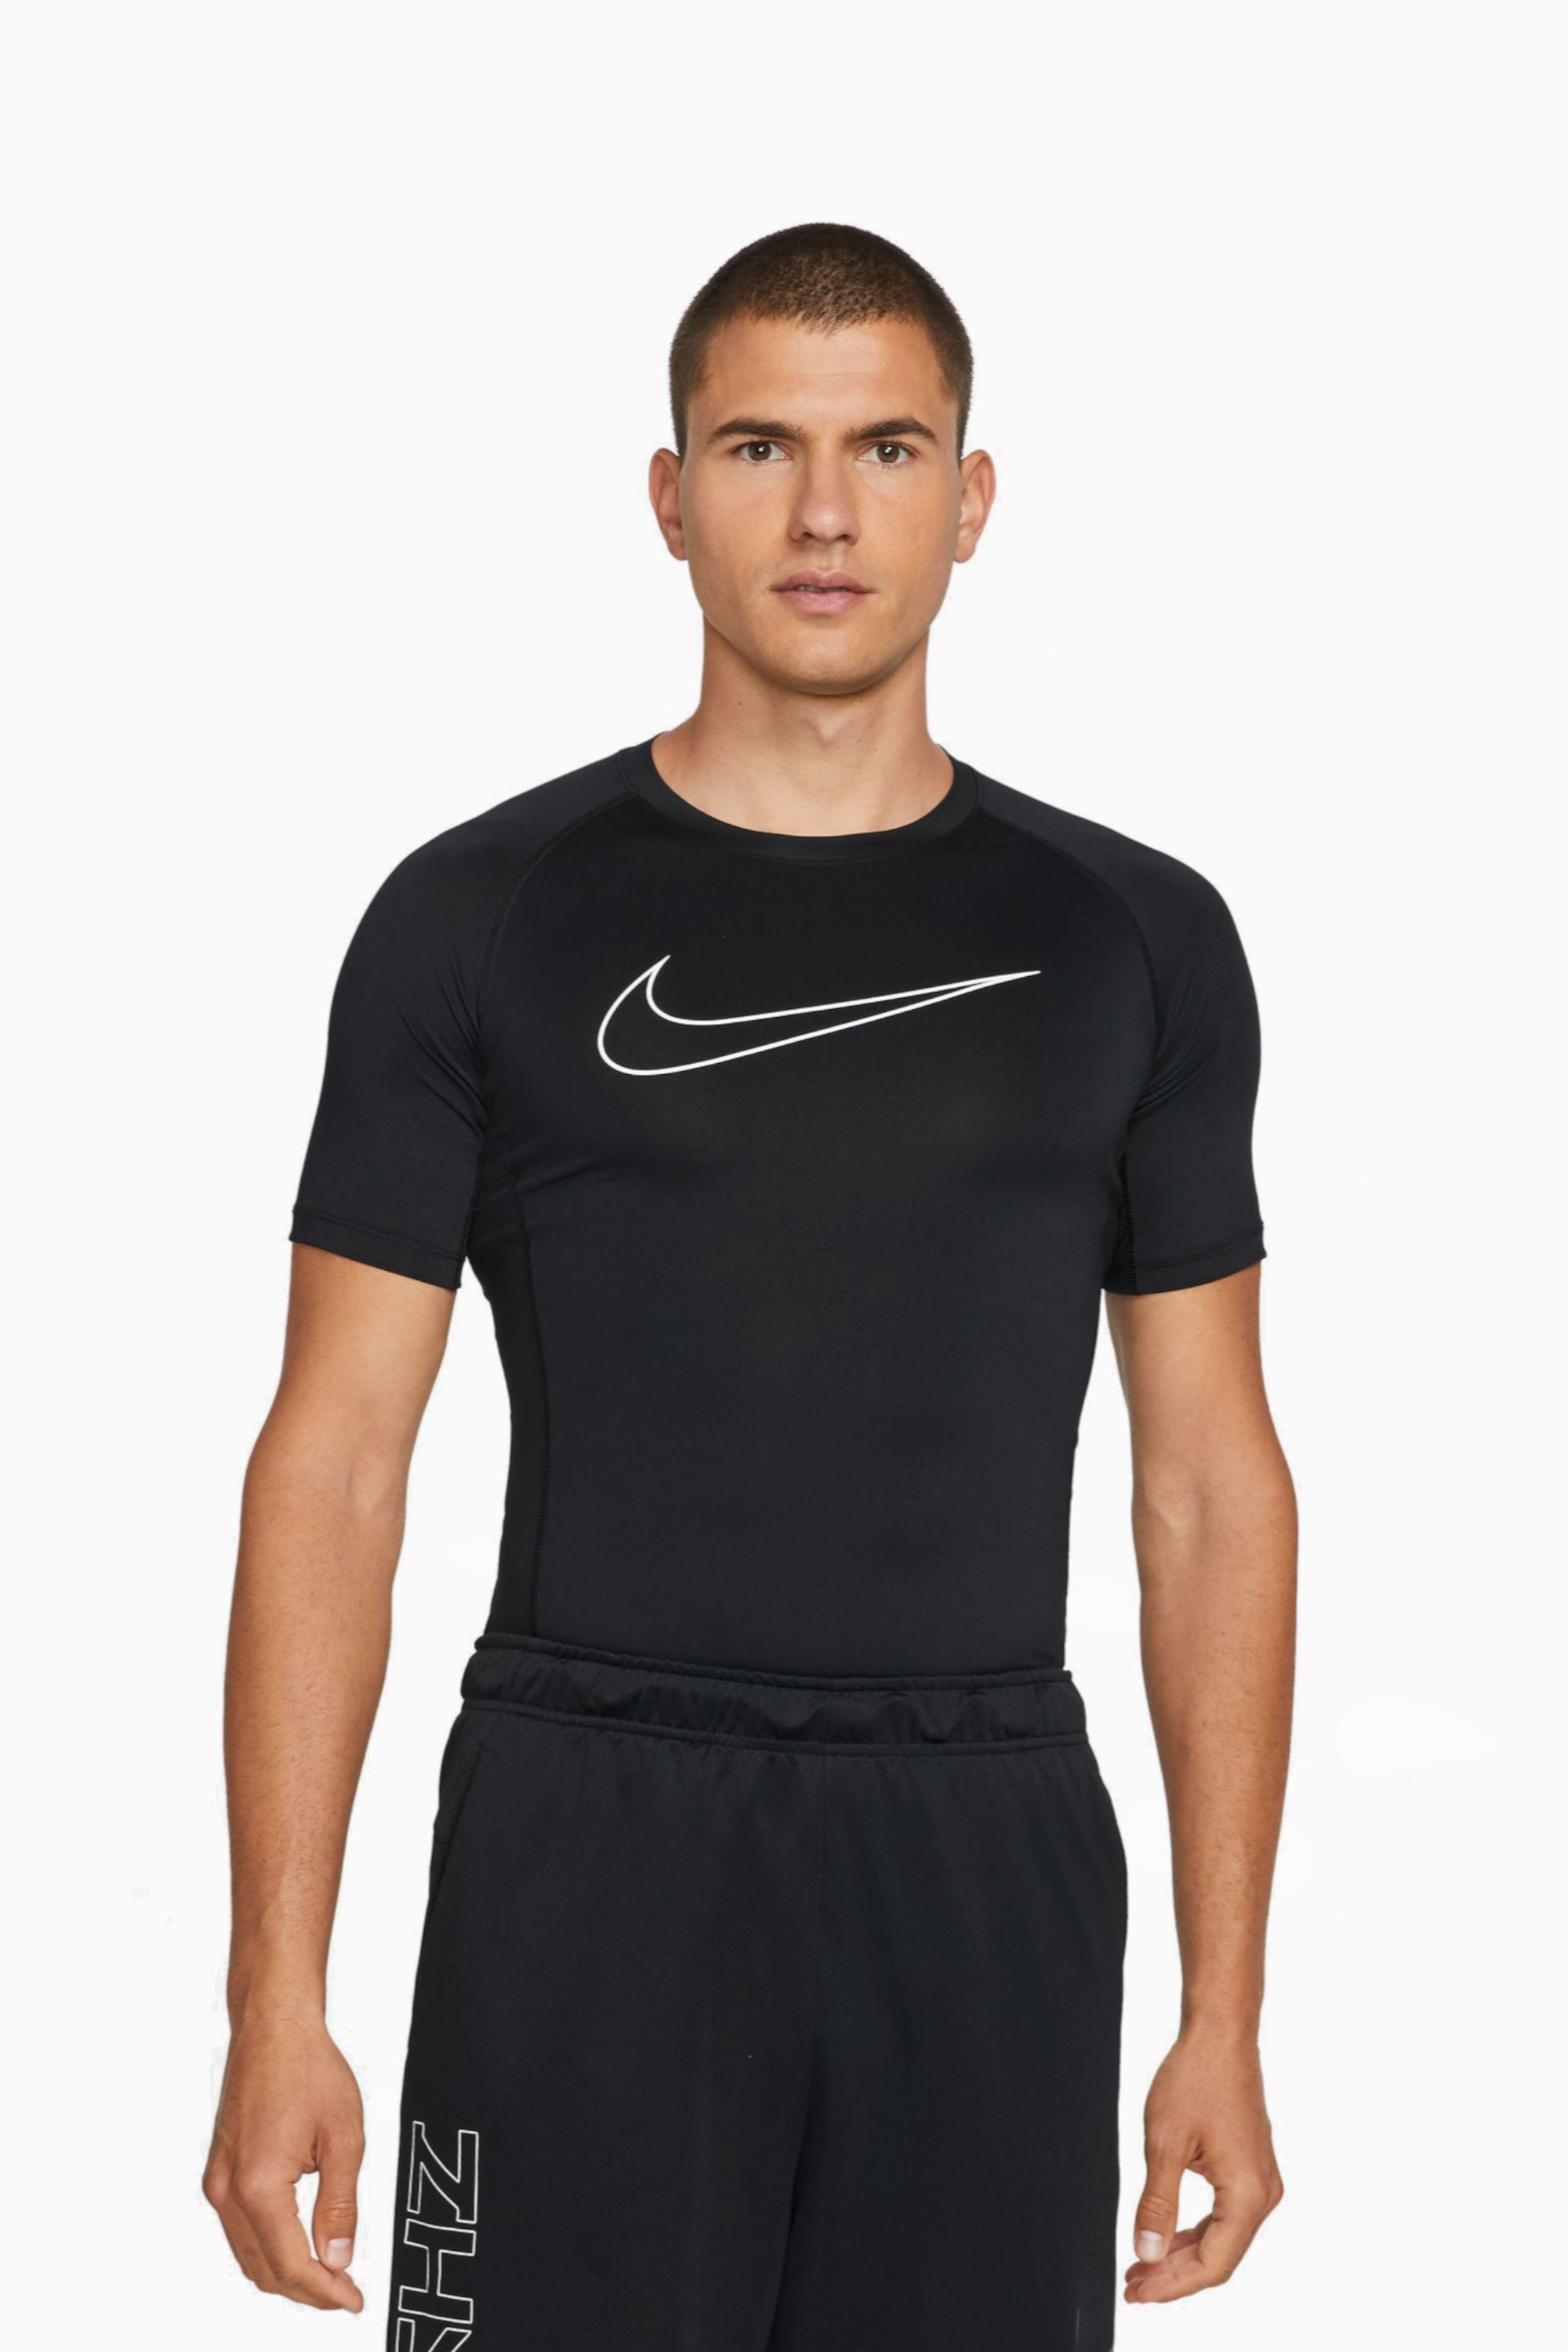 Thermoactive t-shirt Nike Pro Dri-FIT